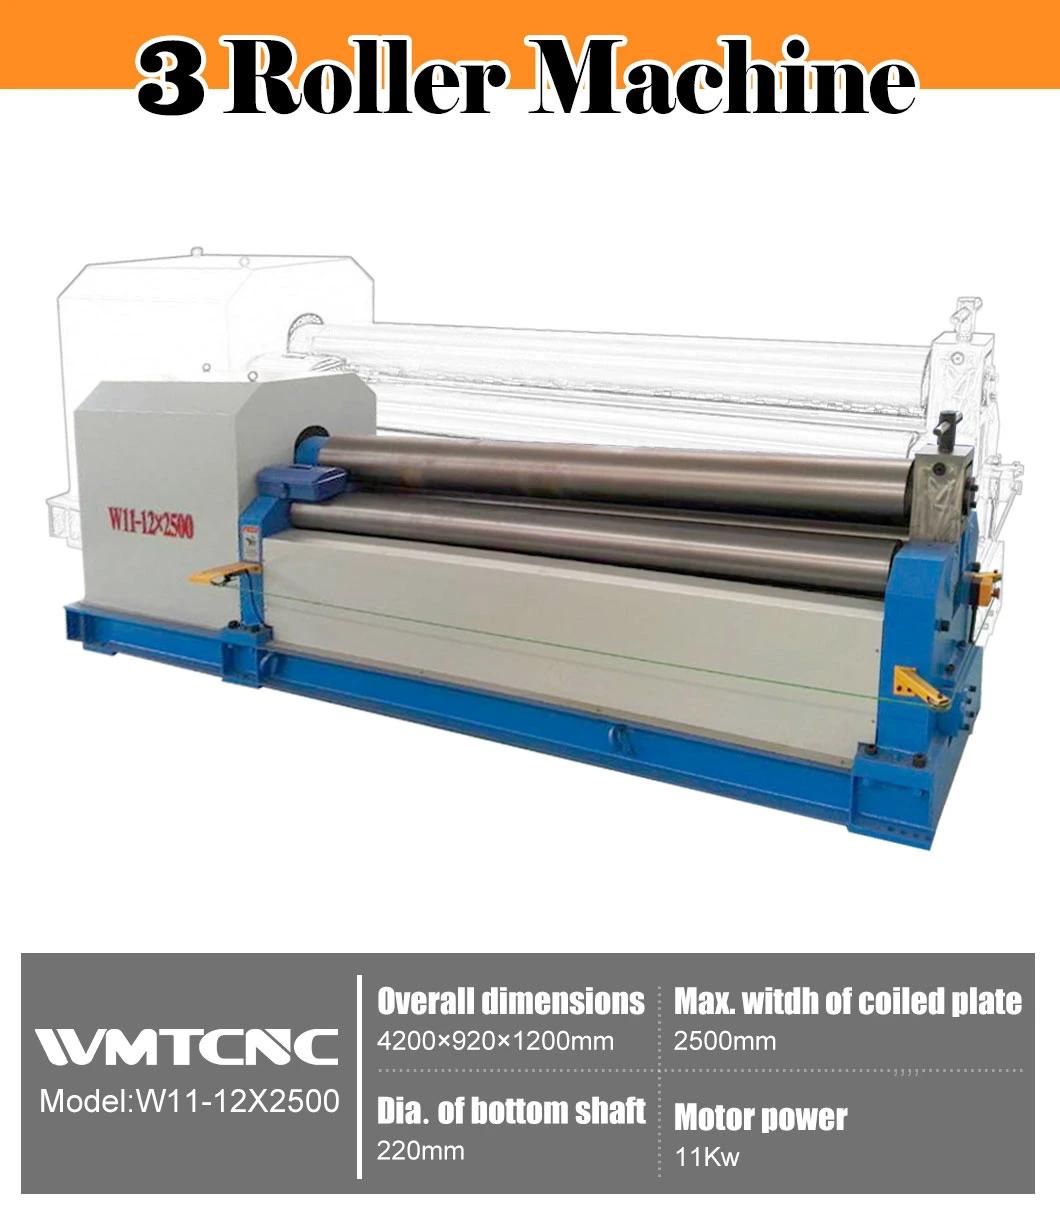 W11-12X2500 Mechanical 3-roller Symmetrical Plate Rolling Machine